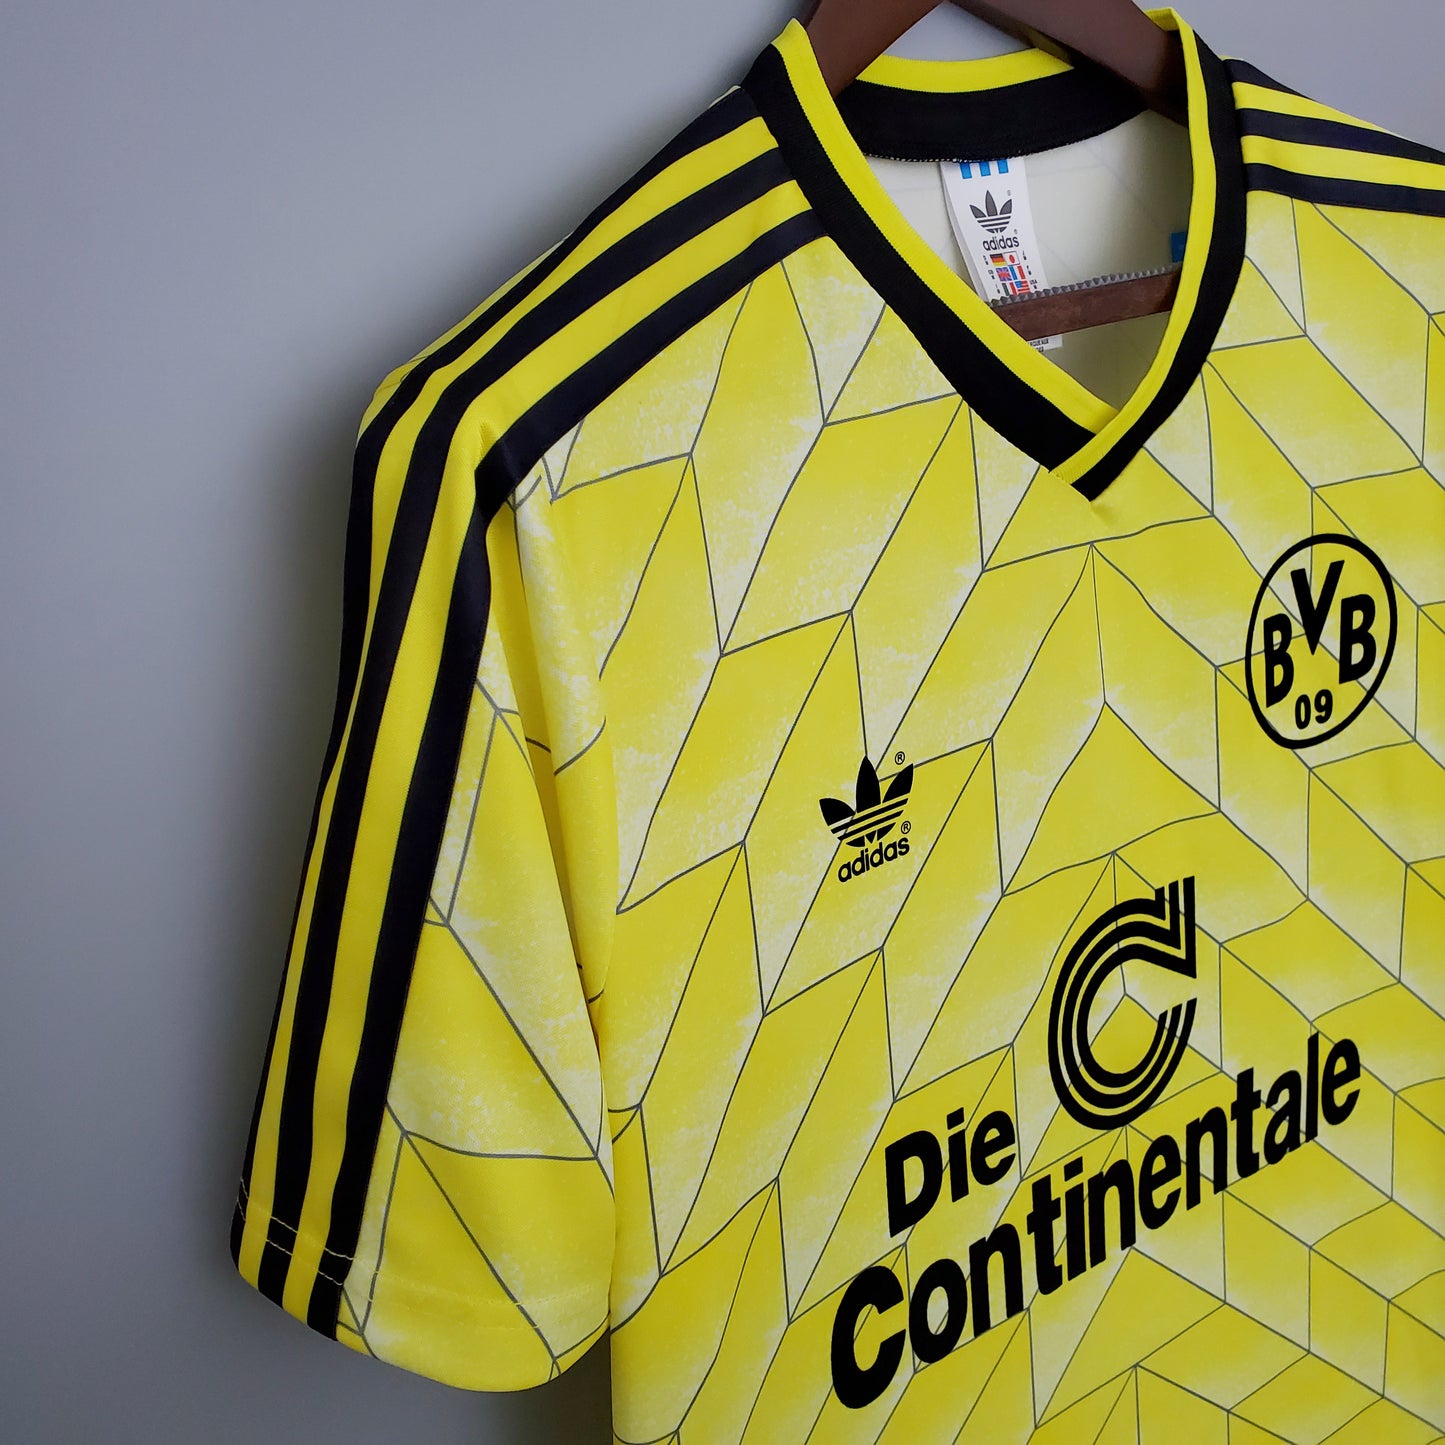 Divisa storica da casa del Borussia Dortmund 1988 